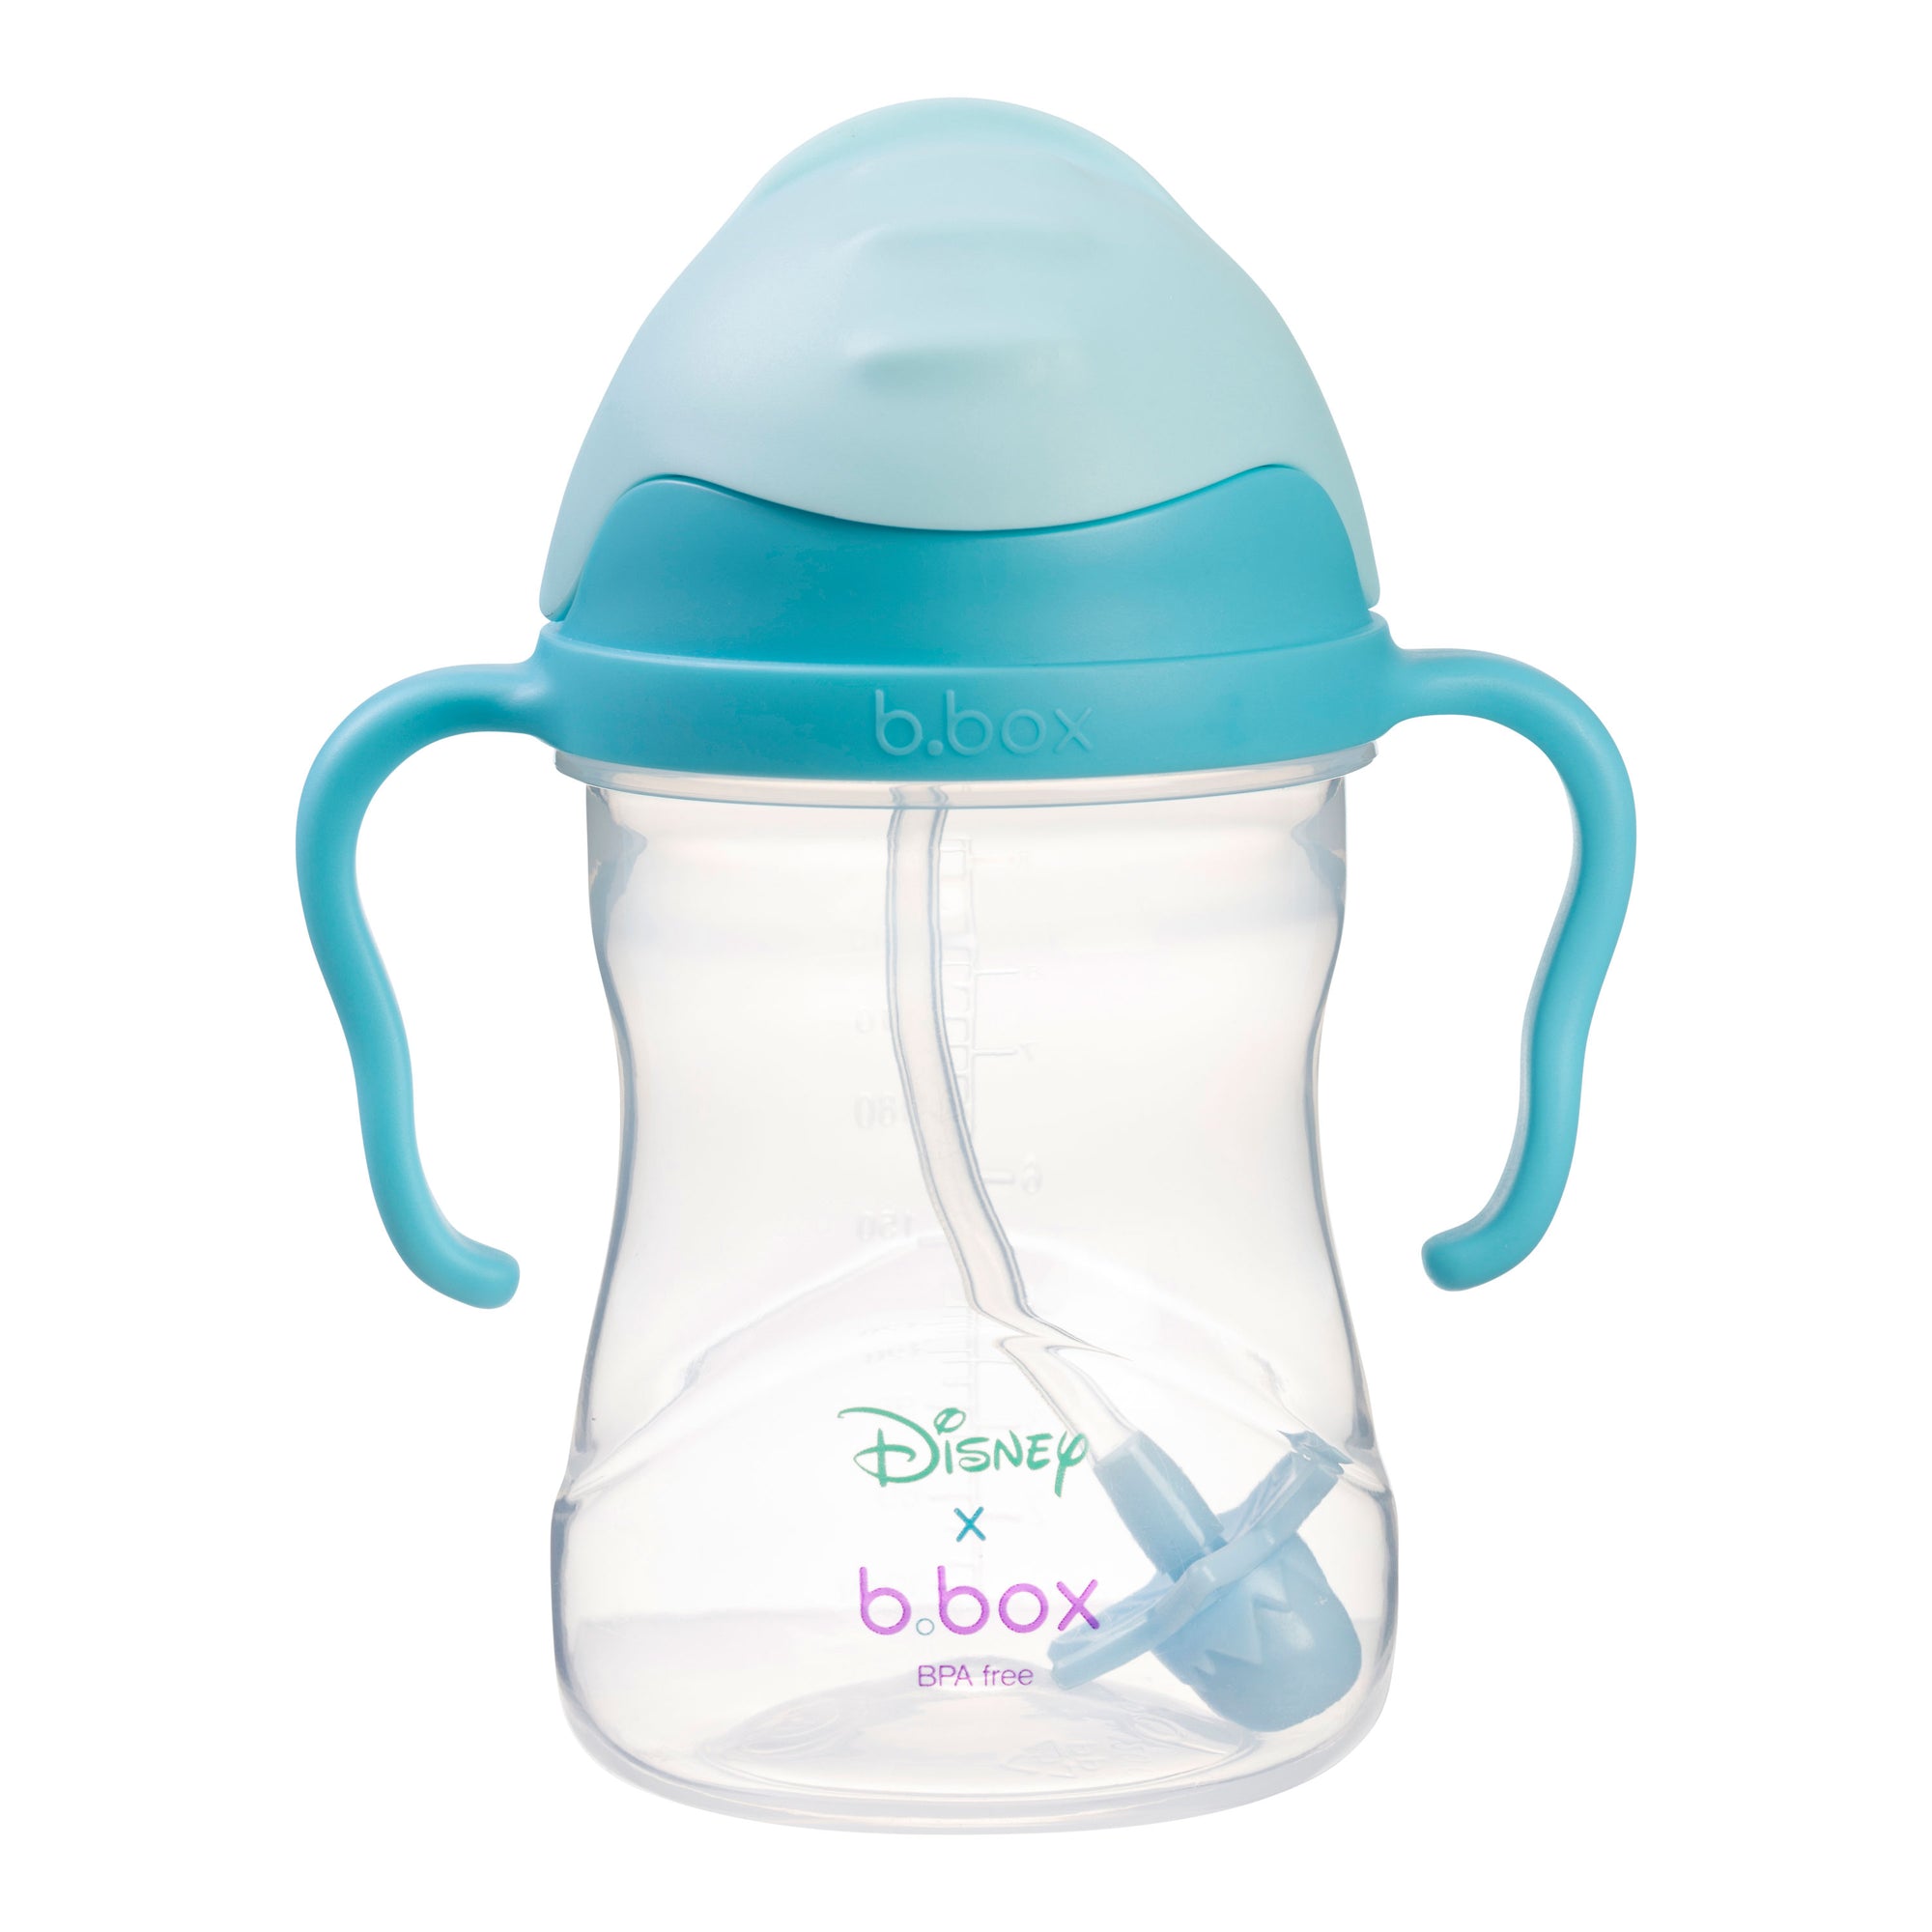 Disney - Elsa sippy cup